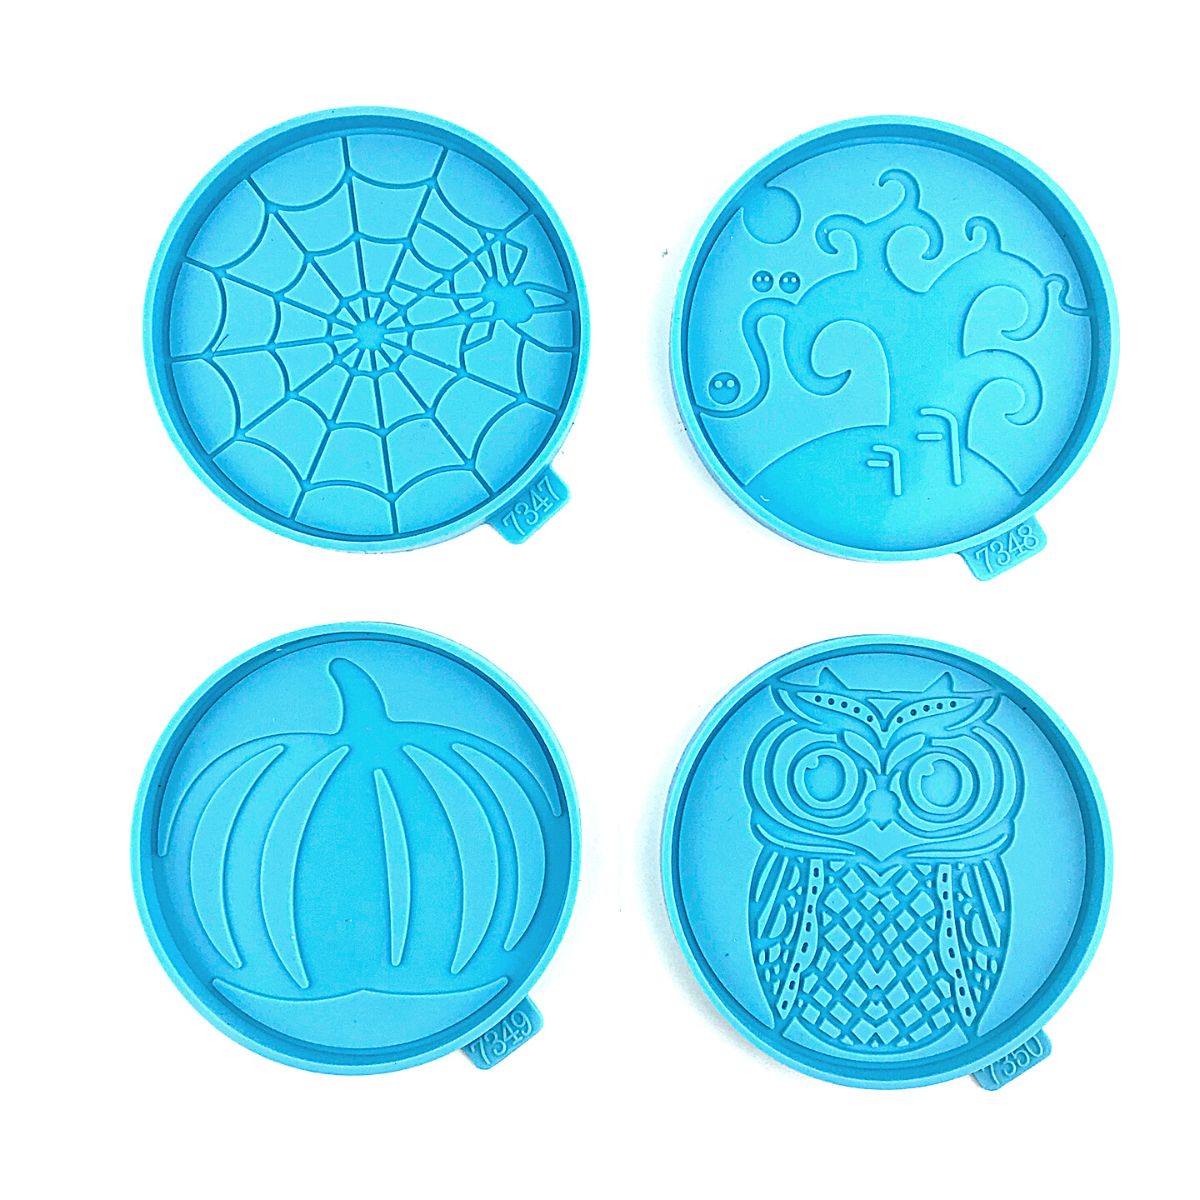 Round Silicone Coaster Mold For Resin Art, Owl Design